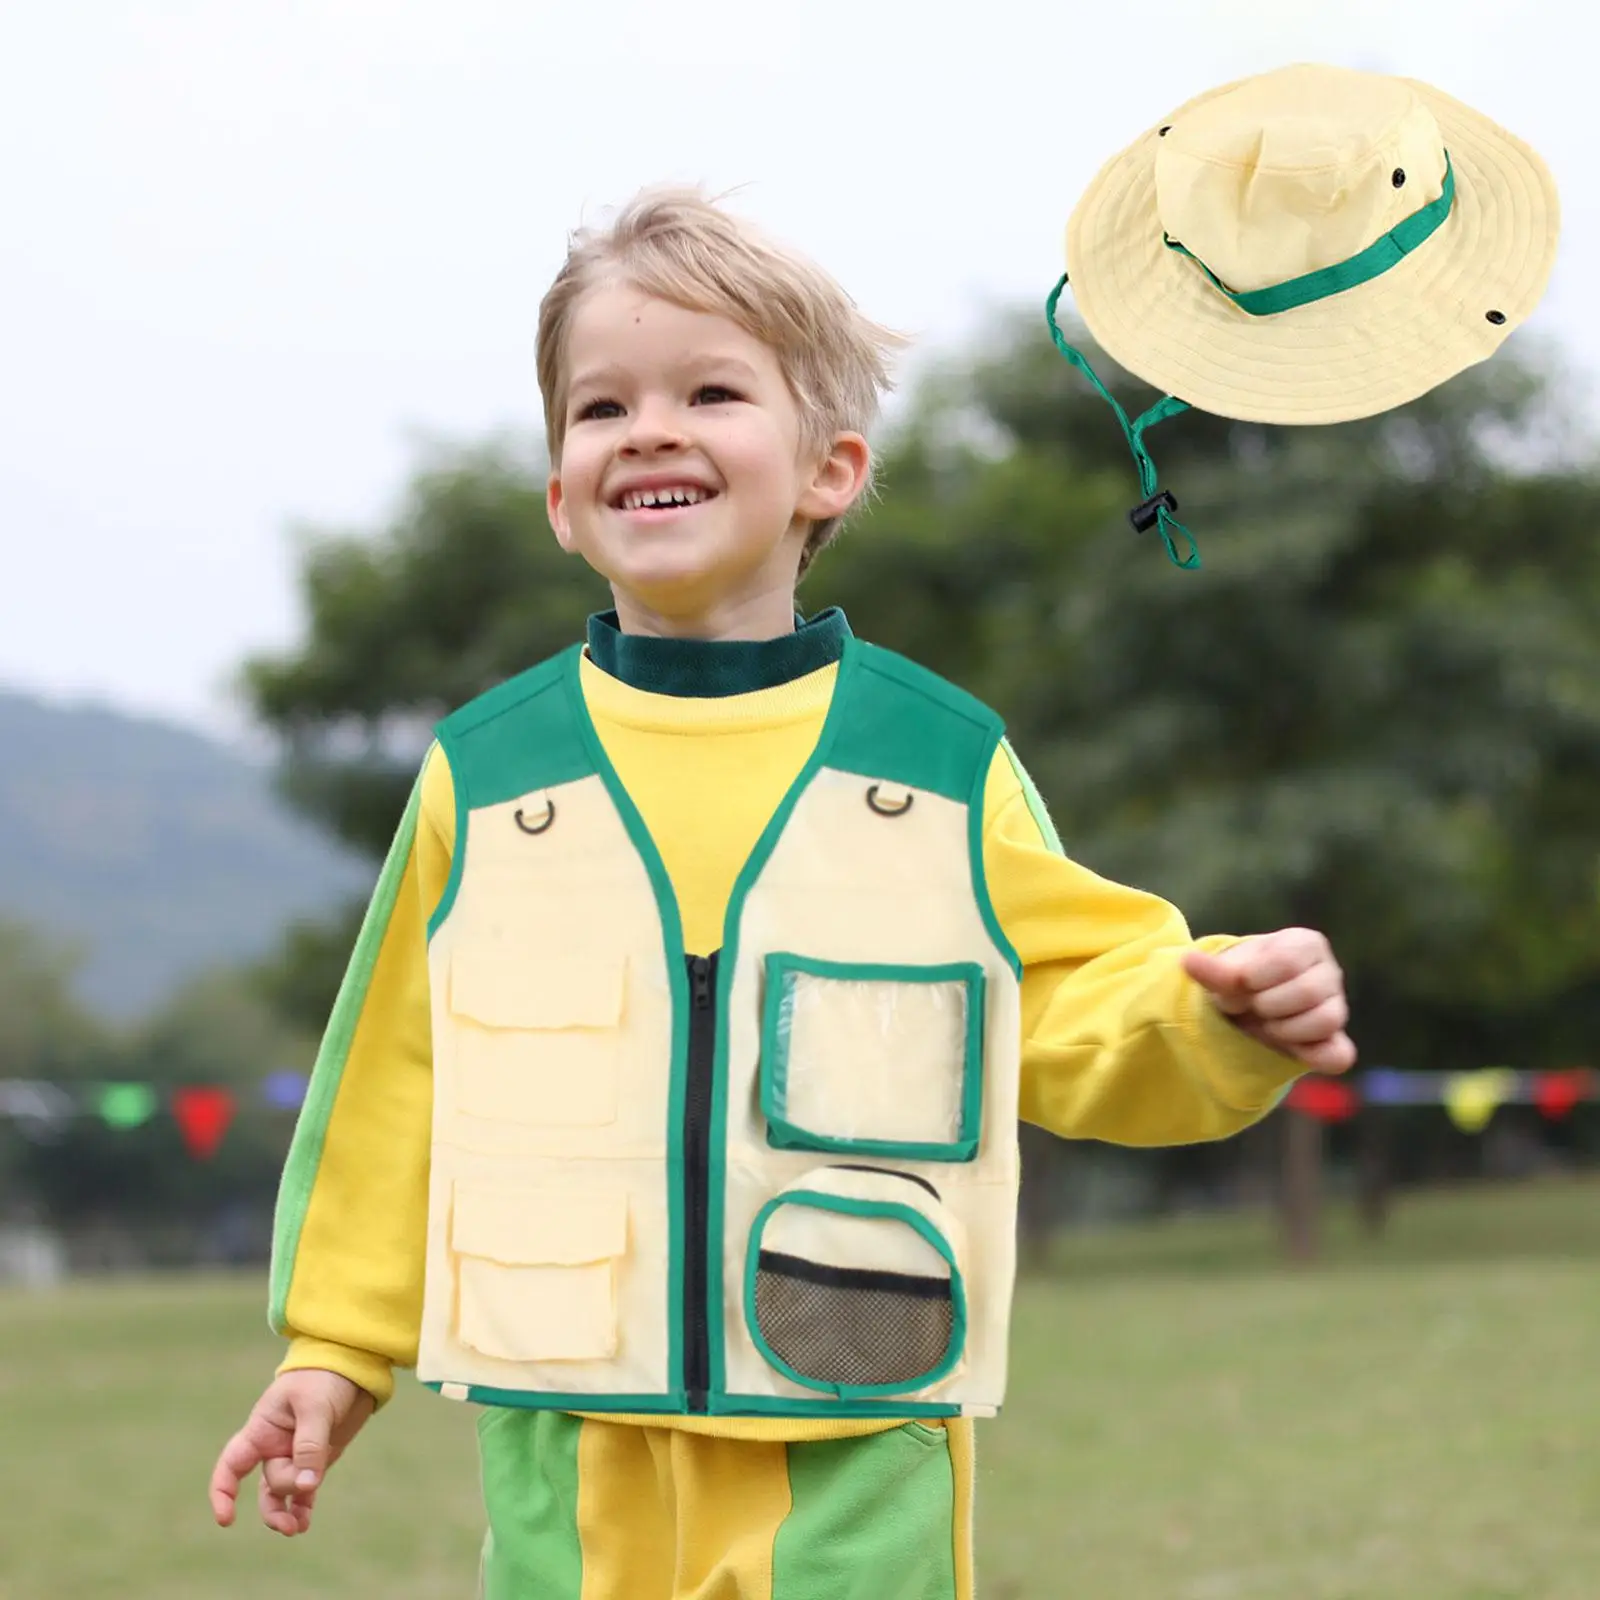 Kids Outdoor Explorer Kit Stage Performances Costume for Children Girls Boys